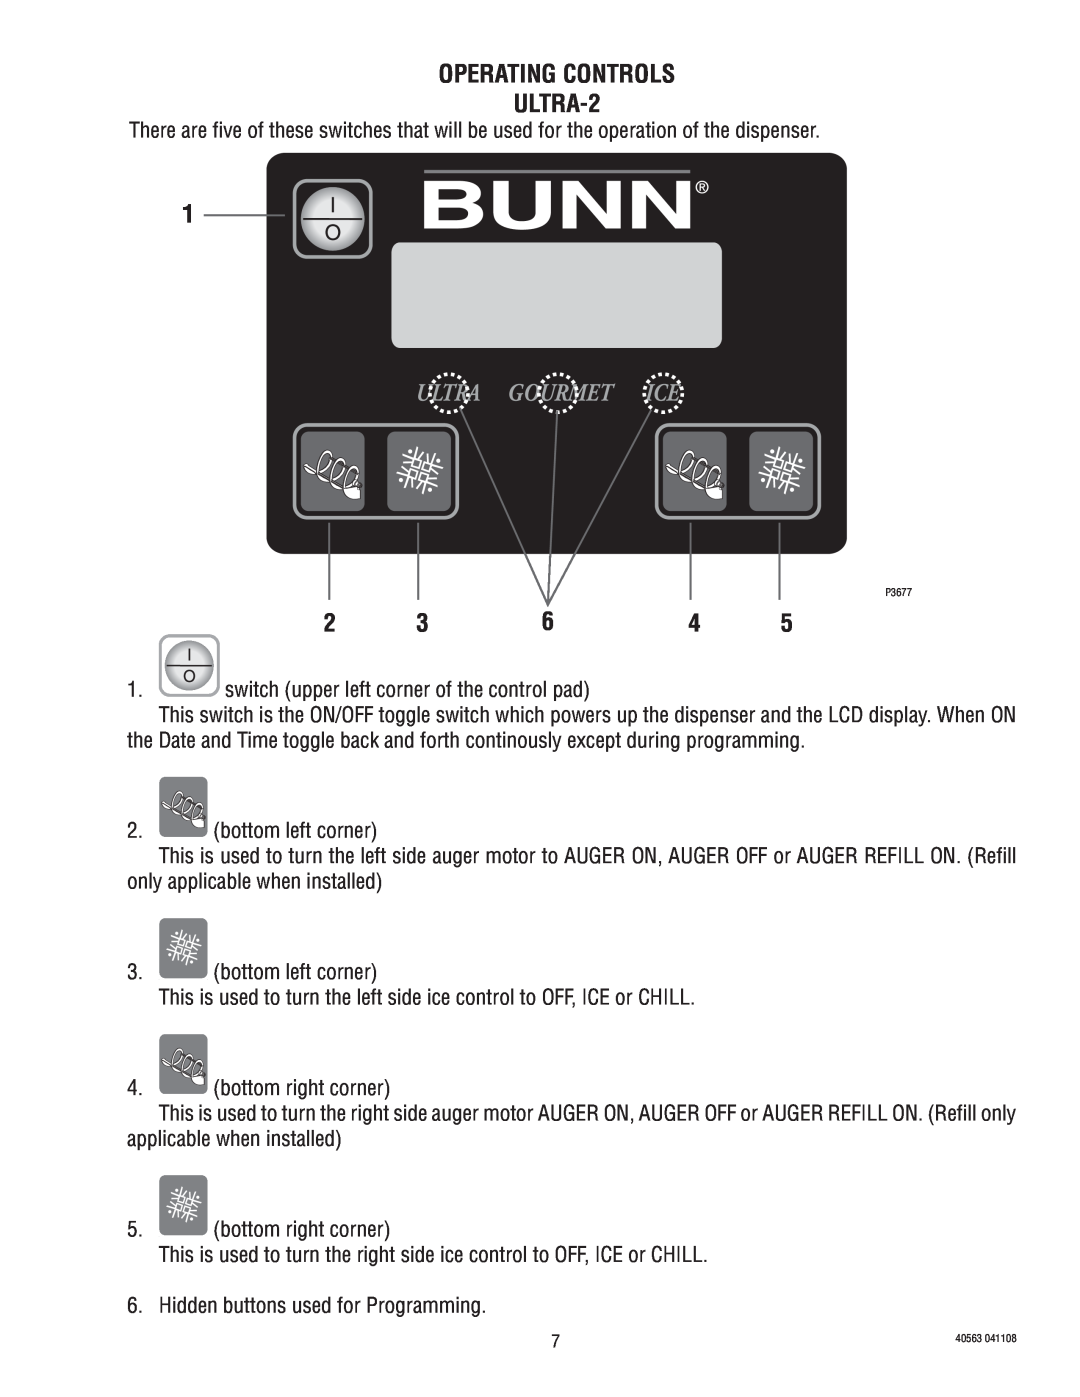 Bunn ULTRA-1 service manual OPERATING CONTROLS ULTRA-2 